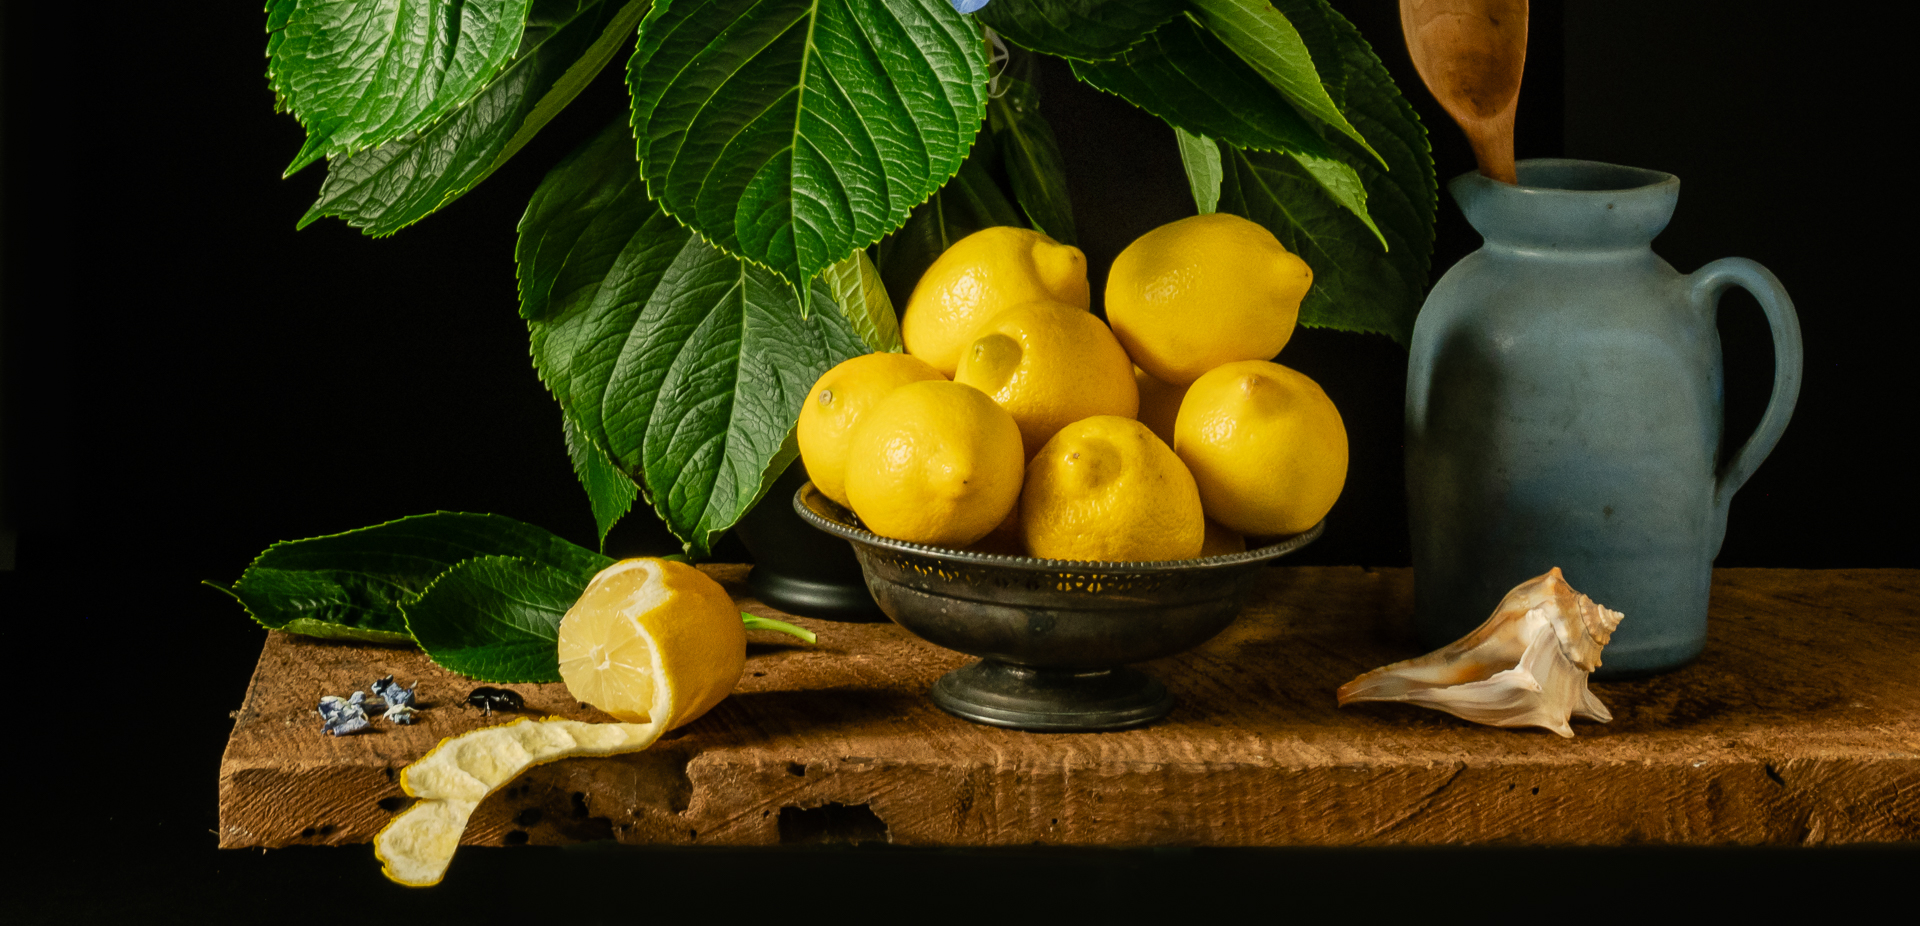 Hydrangeas and Lemons | a Still Life Photograph